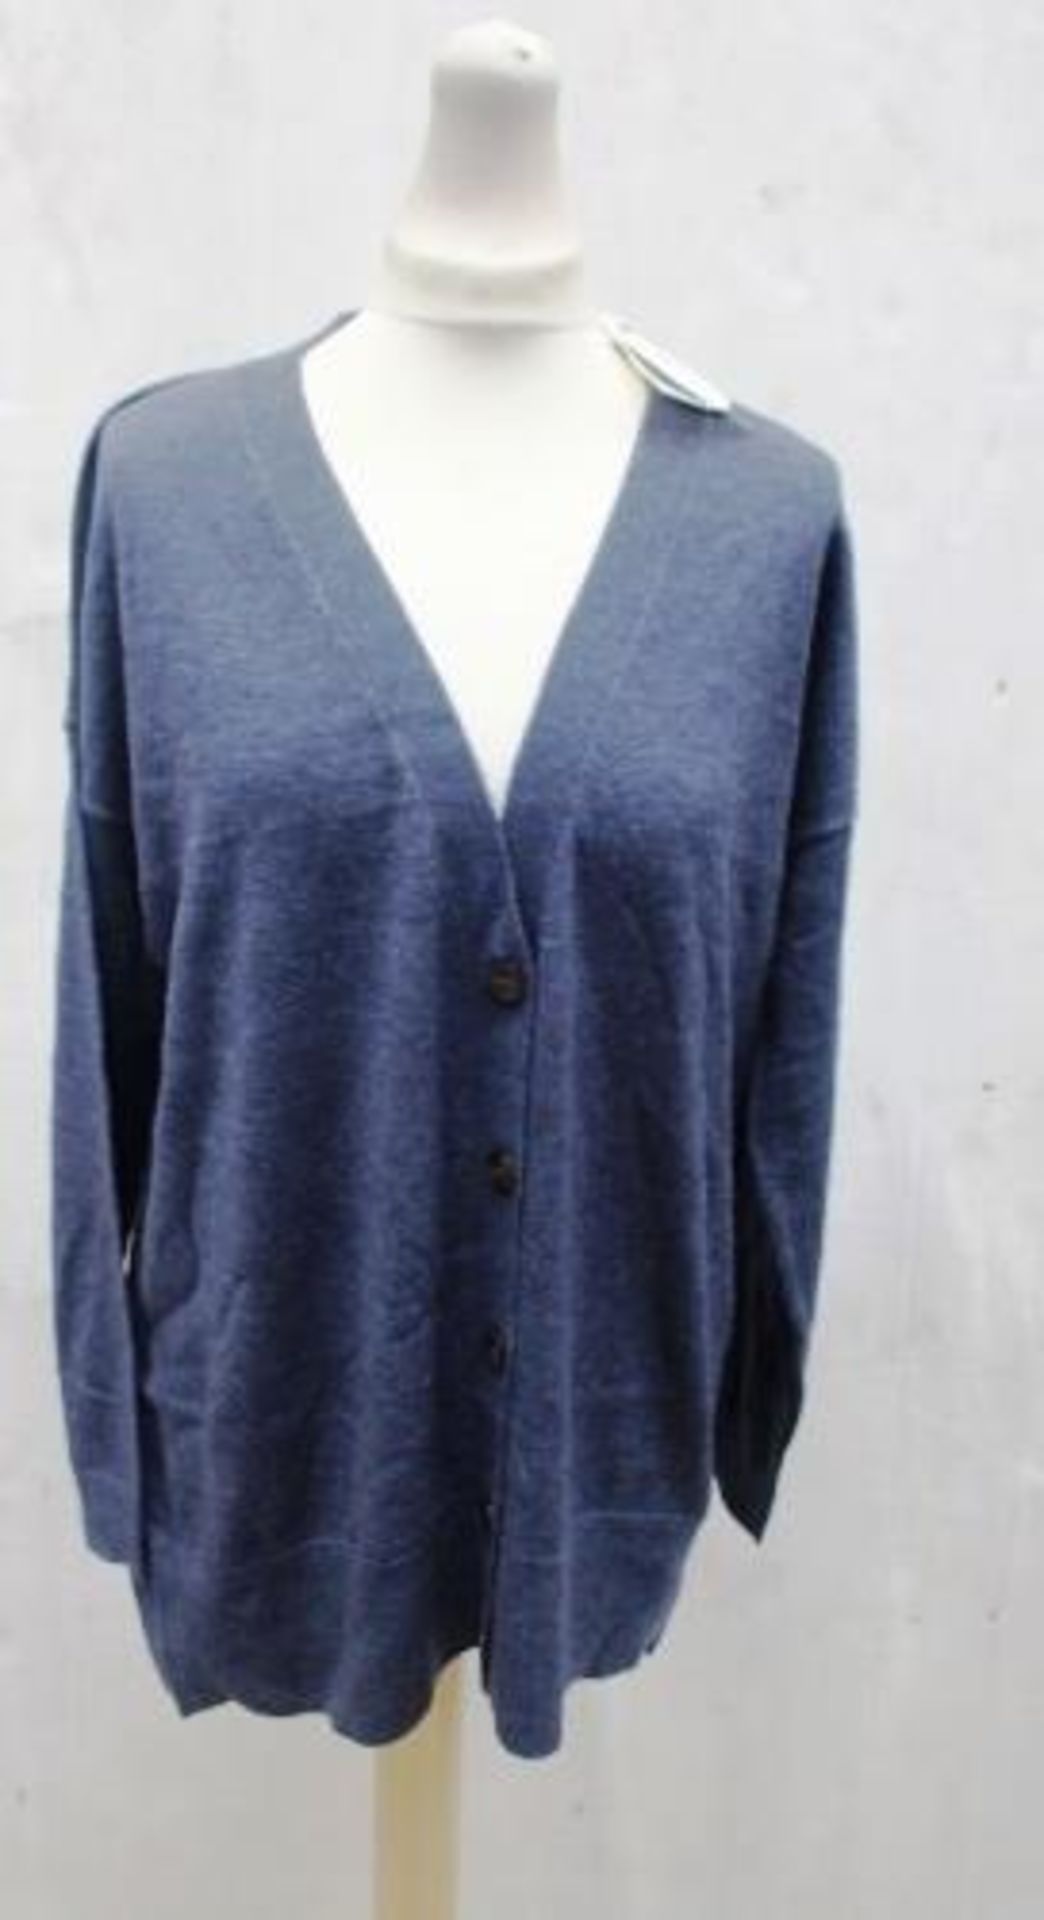 4 x Fat Face Emma Boyfriend blu-navy wool/cashmere blend cardigans, assorted sizes, RRP £56.00